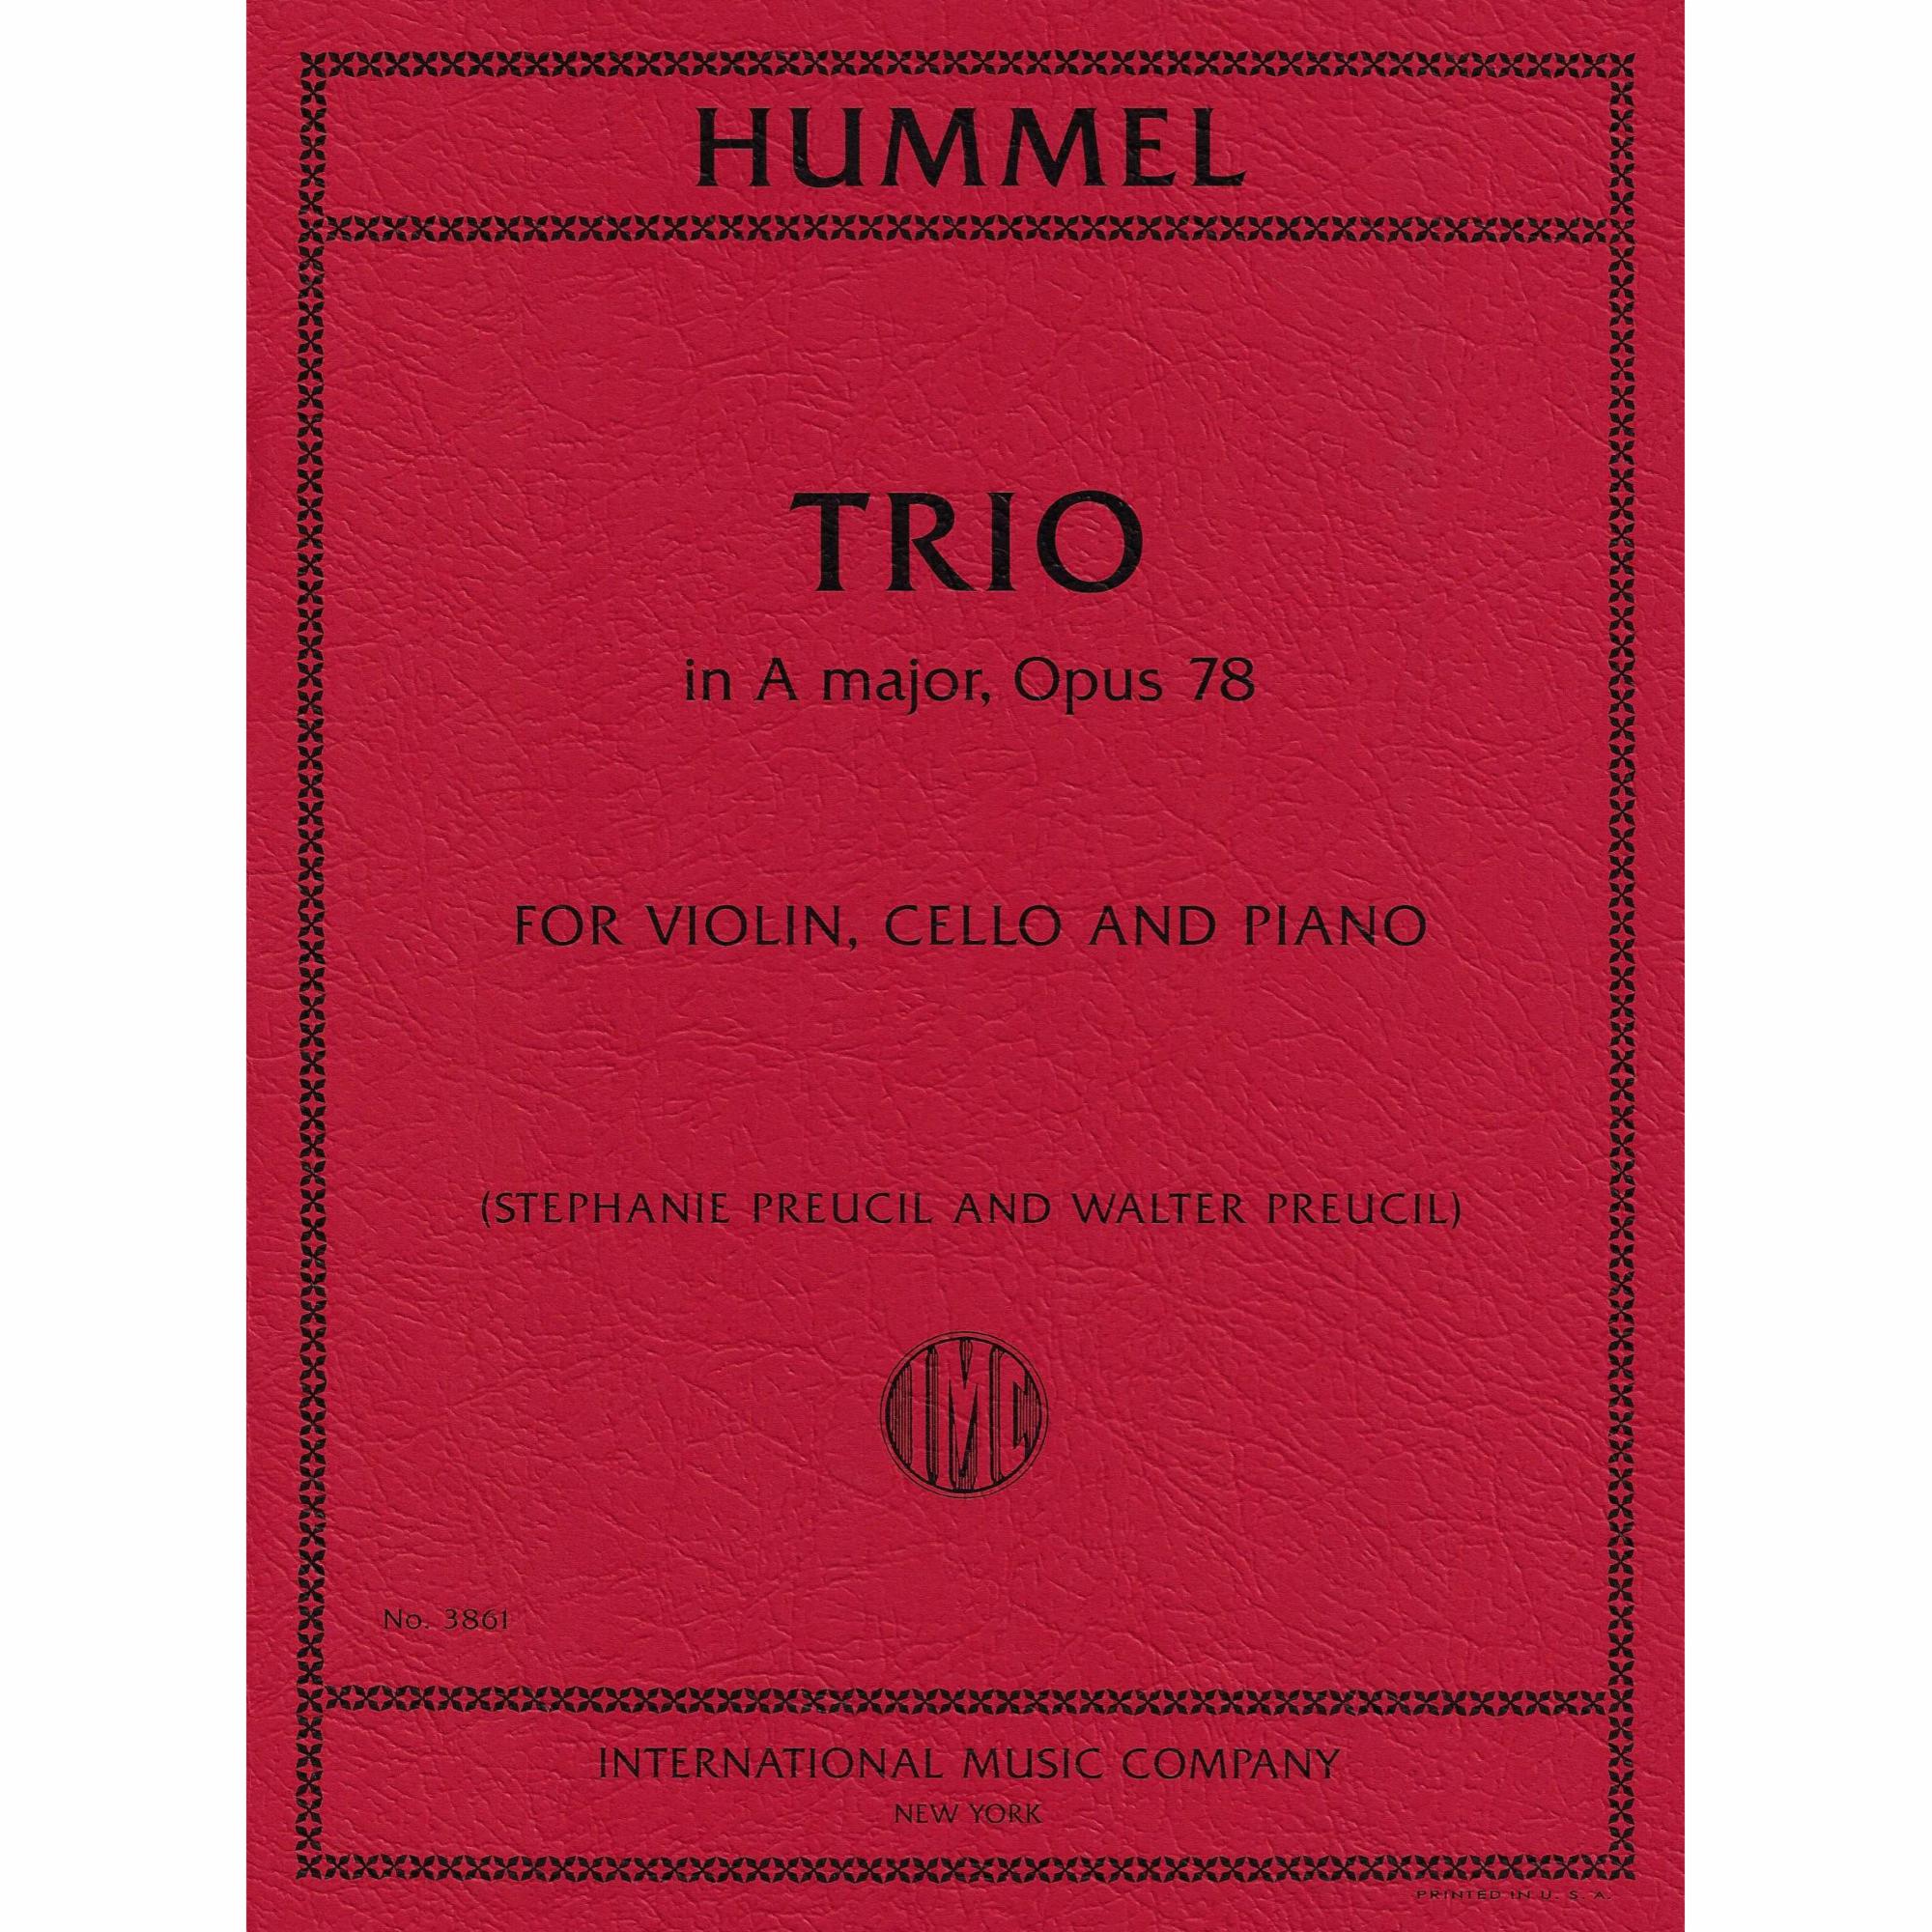 Hummel -- Trio in A Major, Op. 78 for Violin, Cello, and Piano